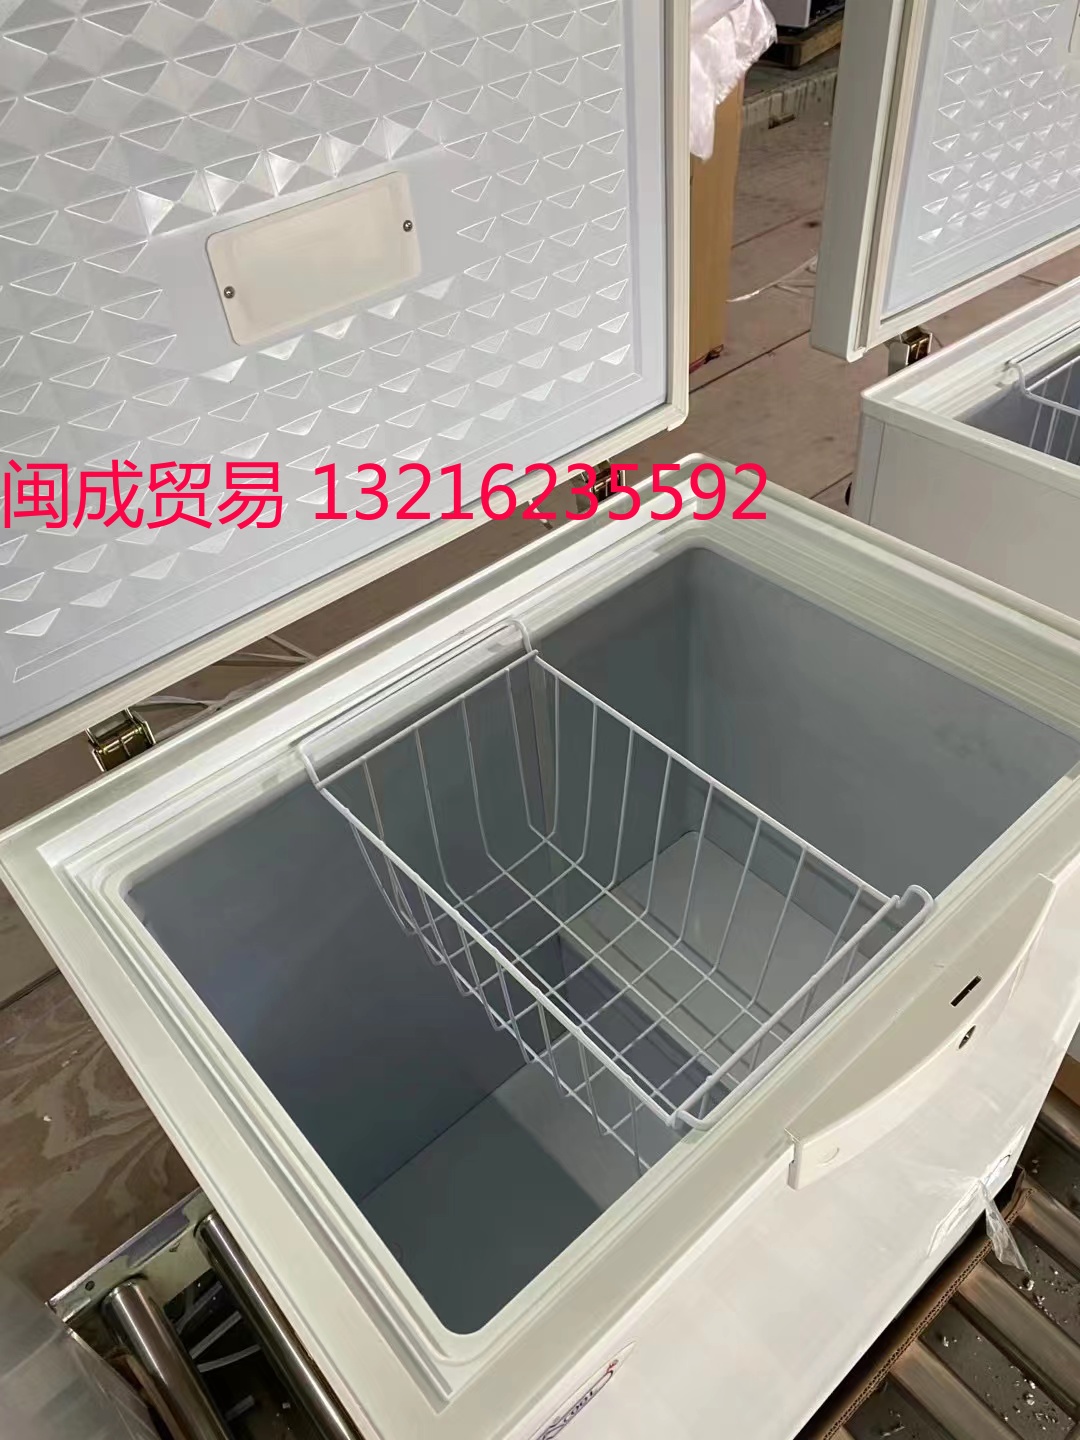 太阳能冰柜 Solar freezer 308L